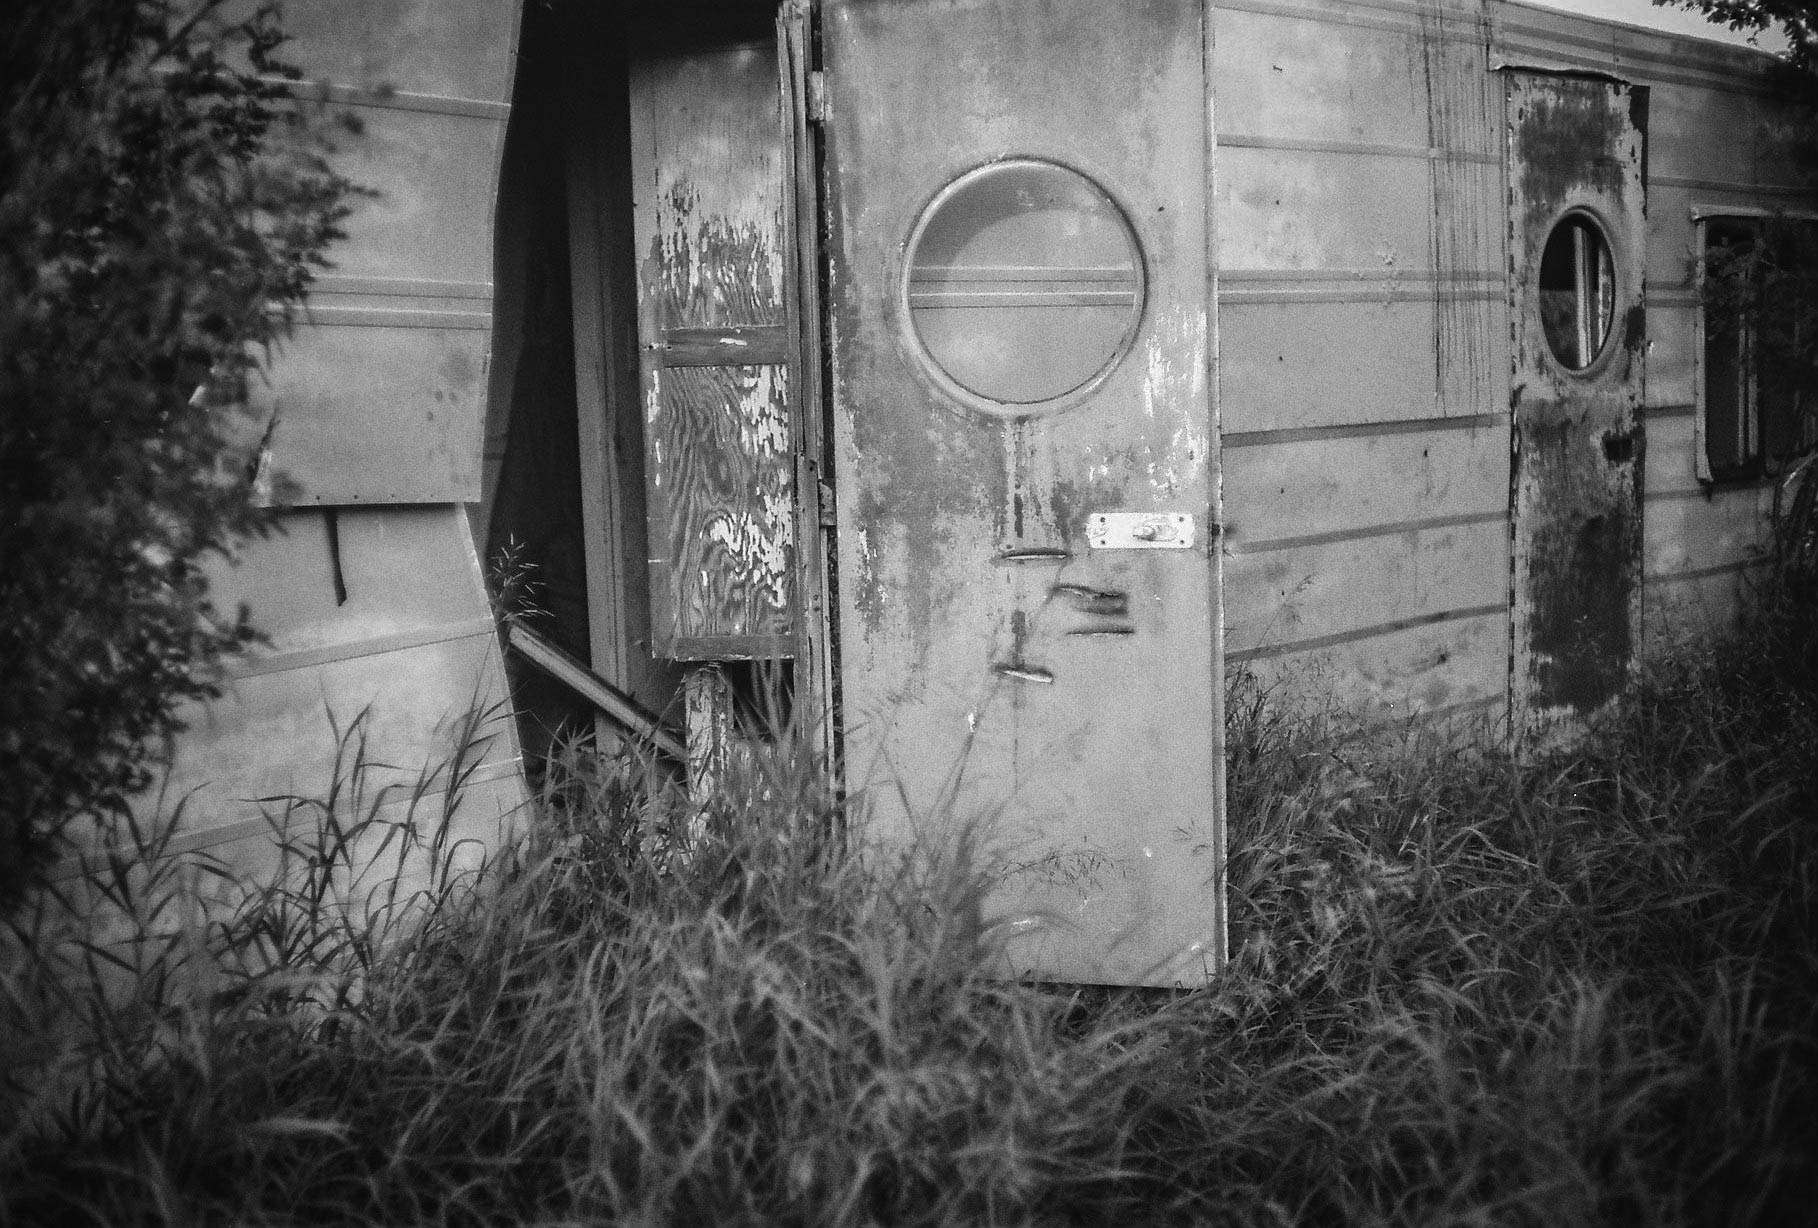  Abandoned trailer Bulwark, Alberta Leica M3, Canon 50mm F1.4 Ilford Pan F Plus 50 film 7.16 